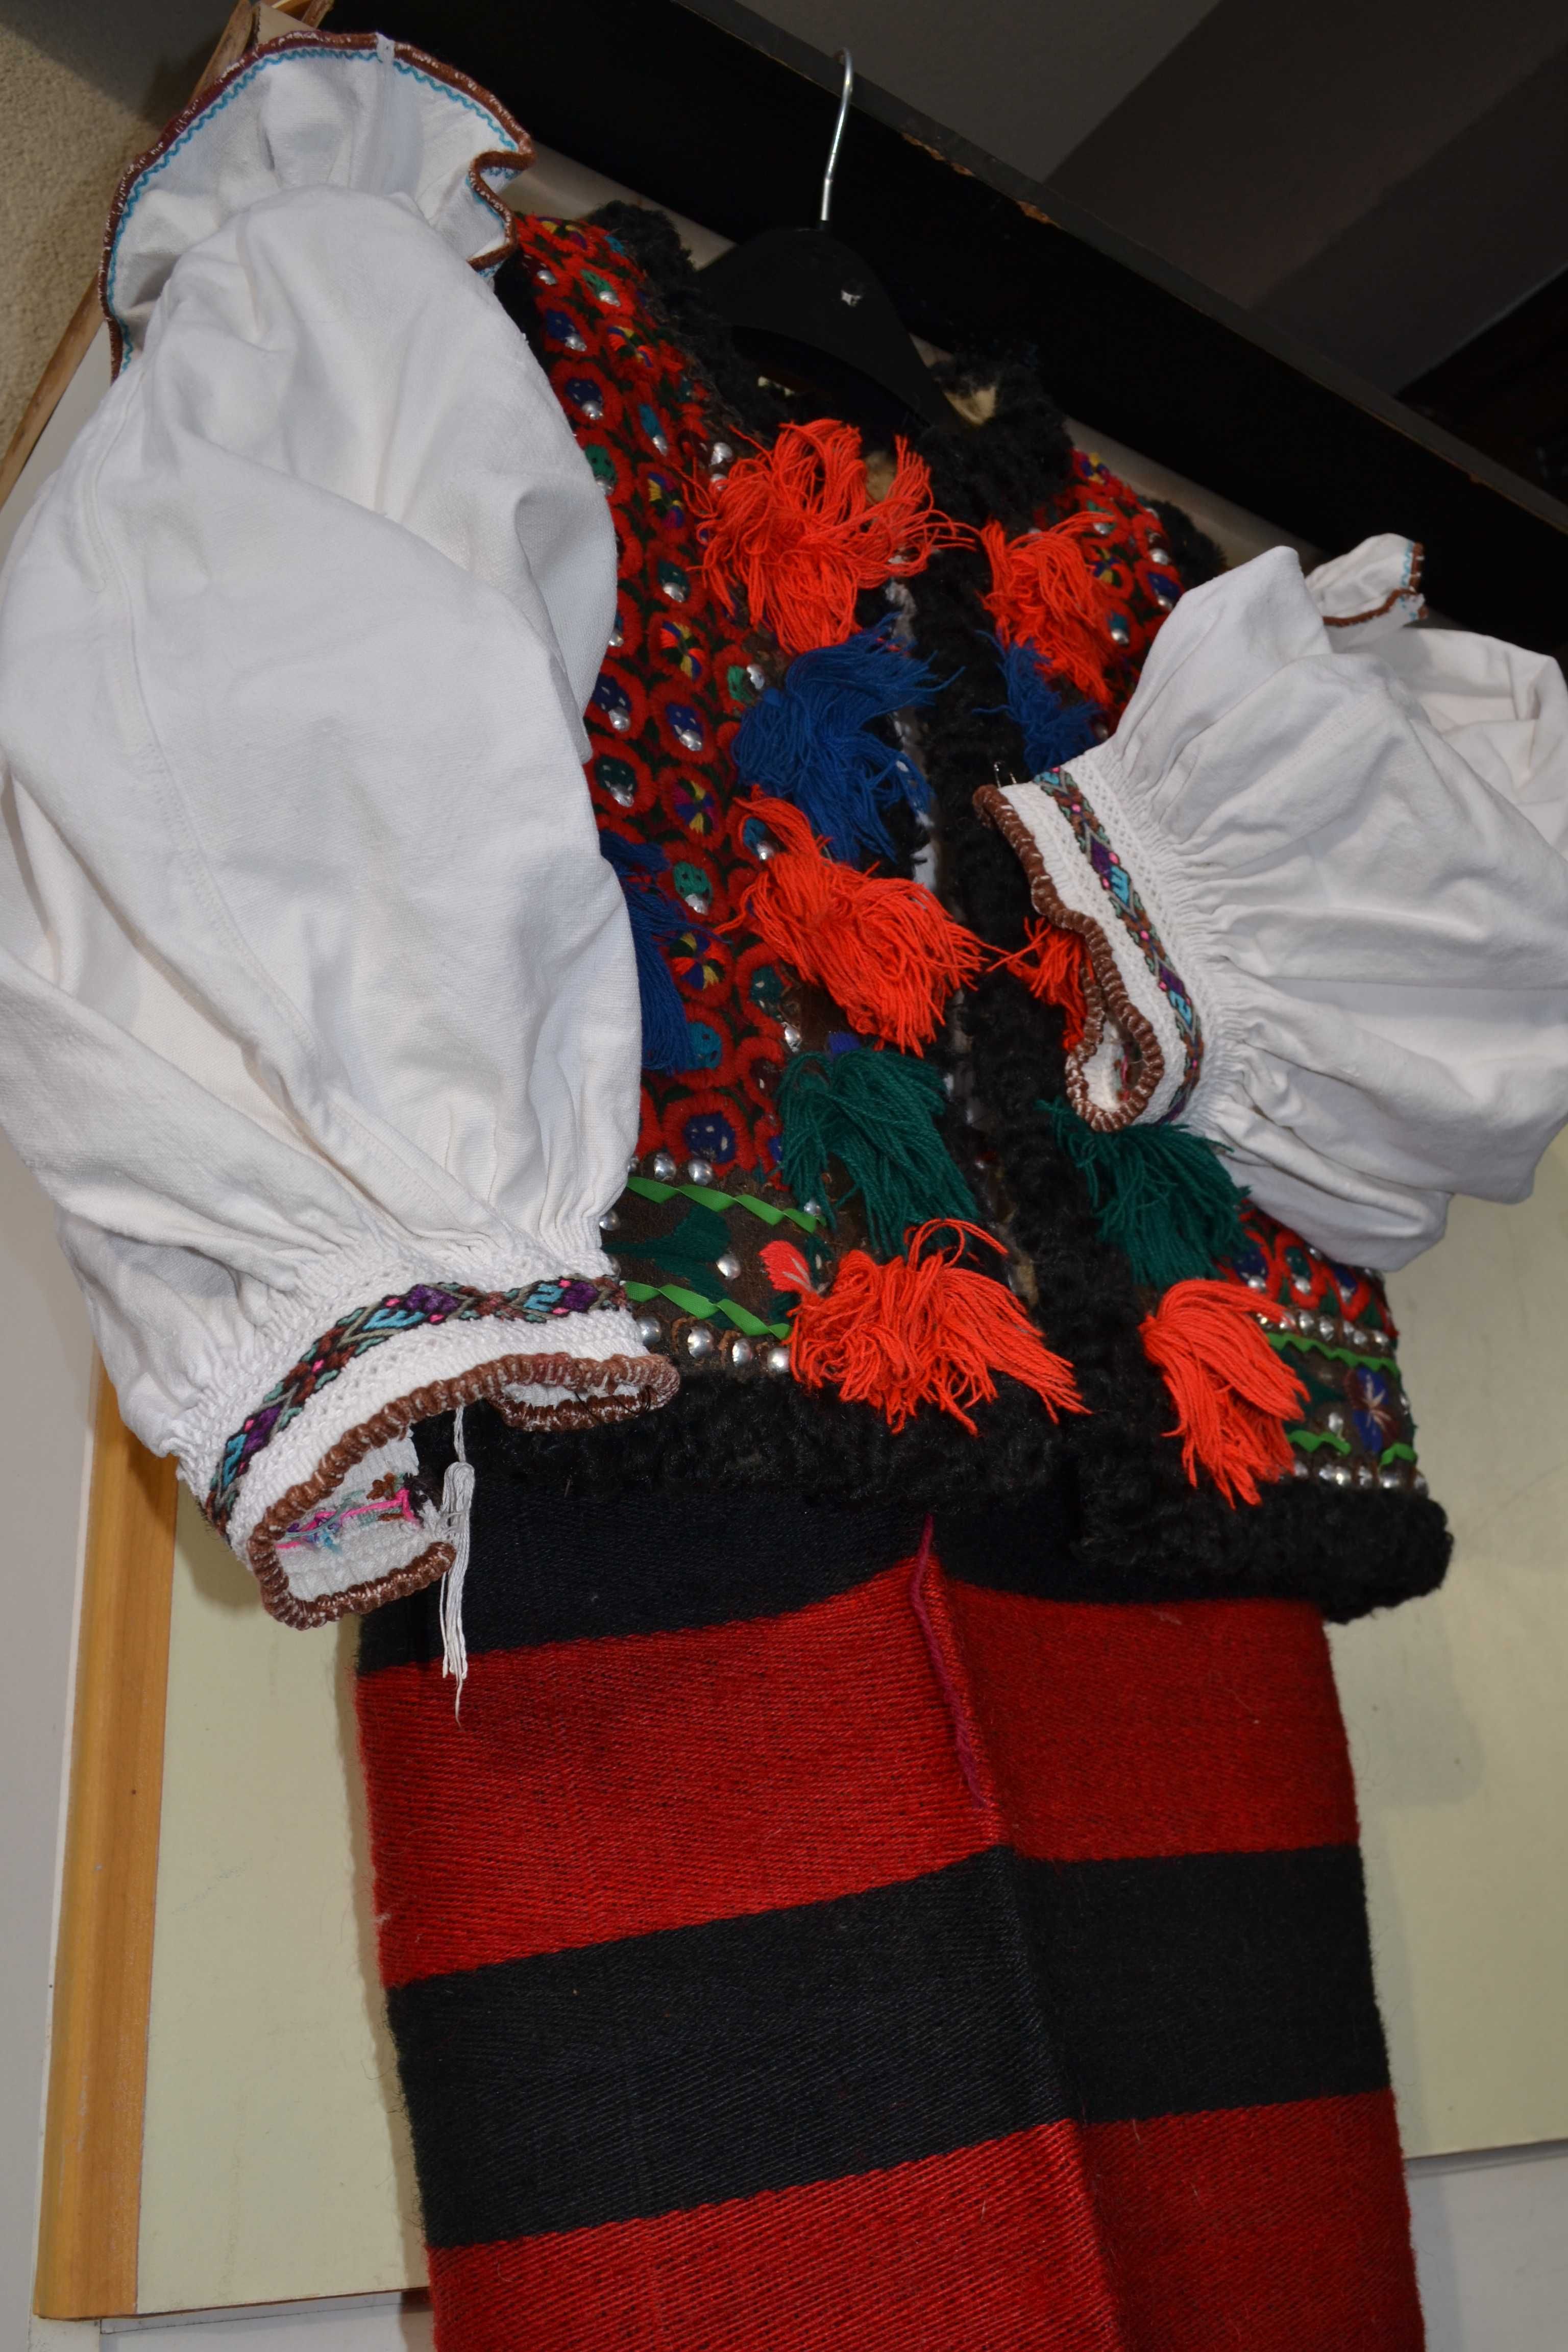 Camasa traditionala de Maramures (Valea Izei)